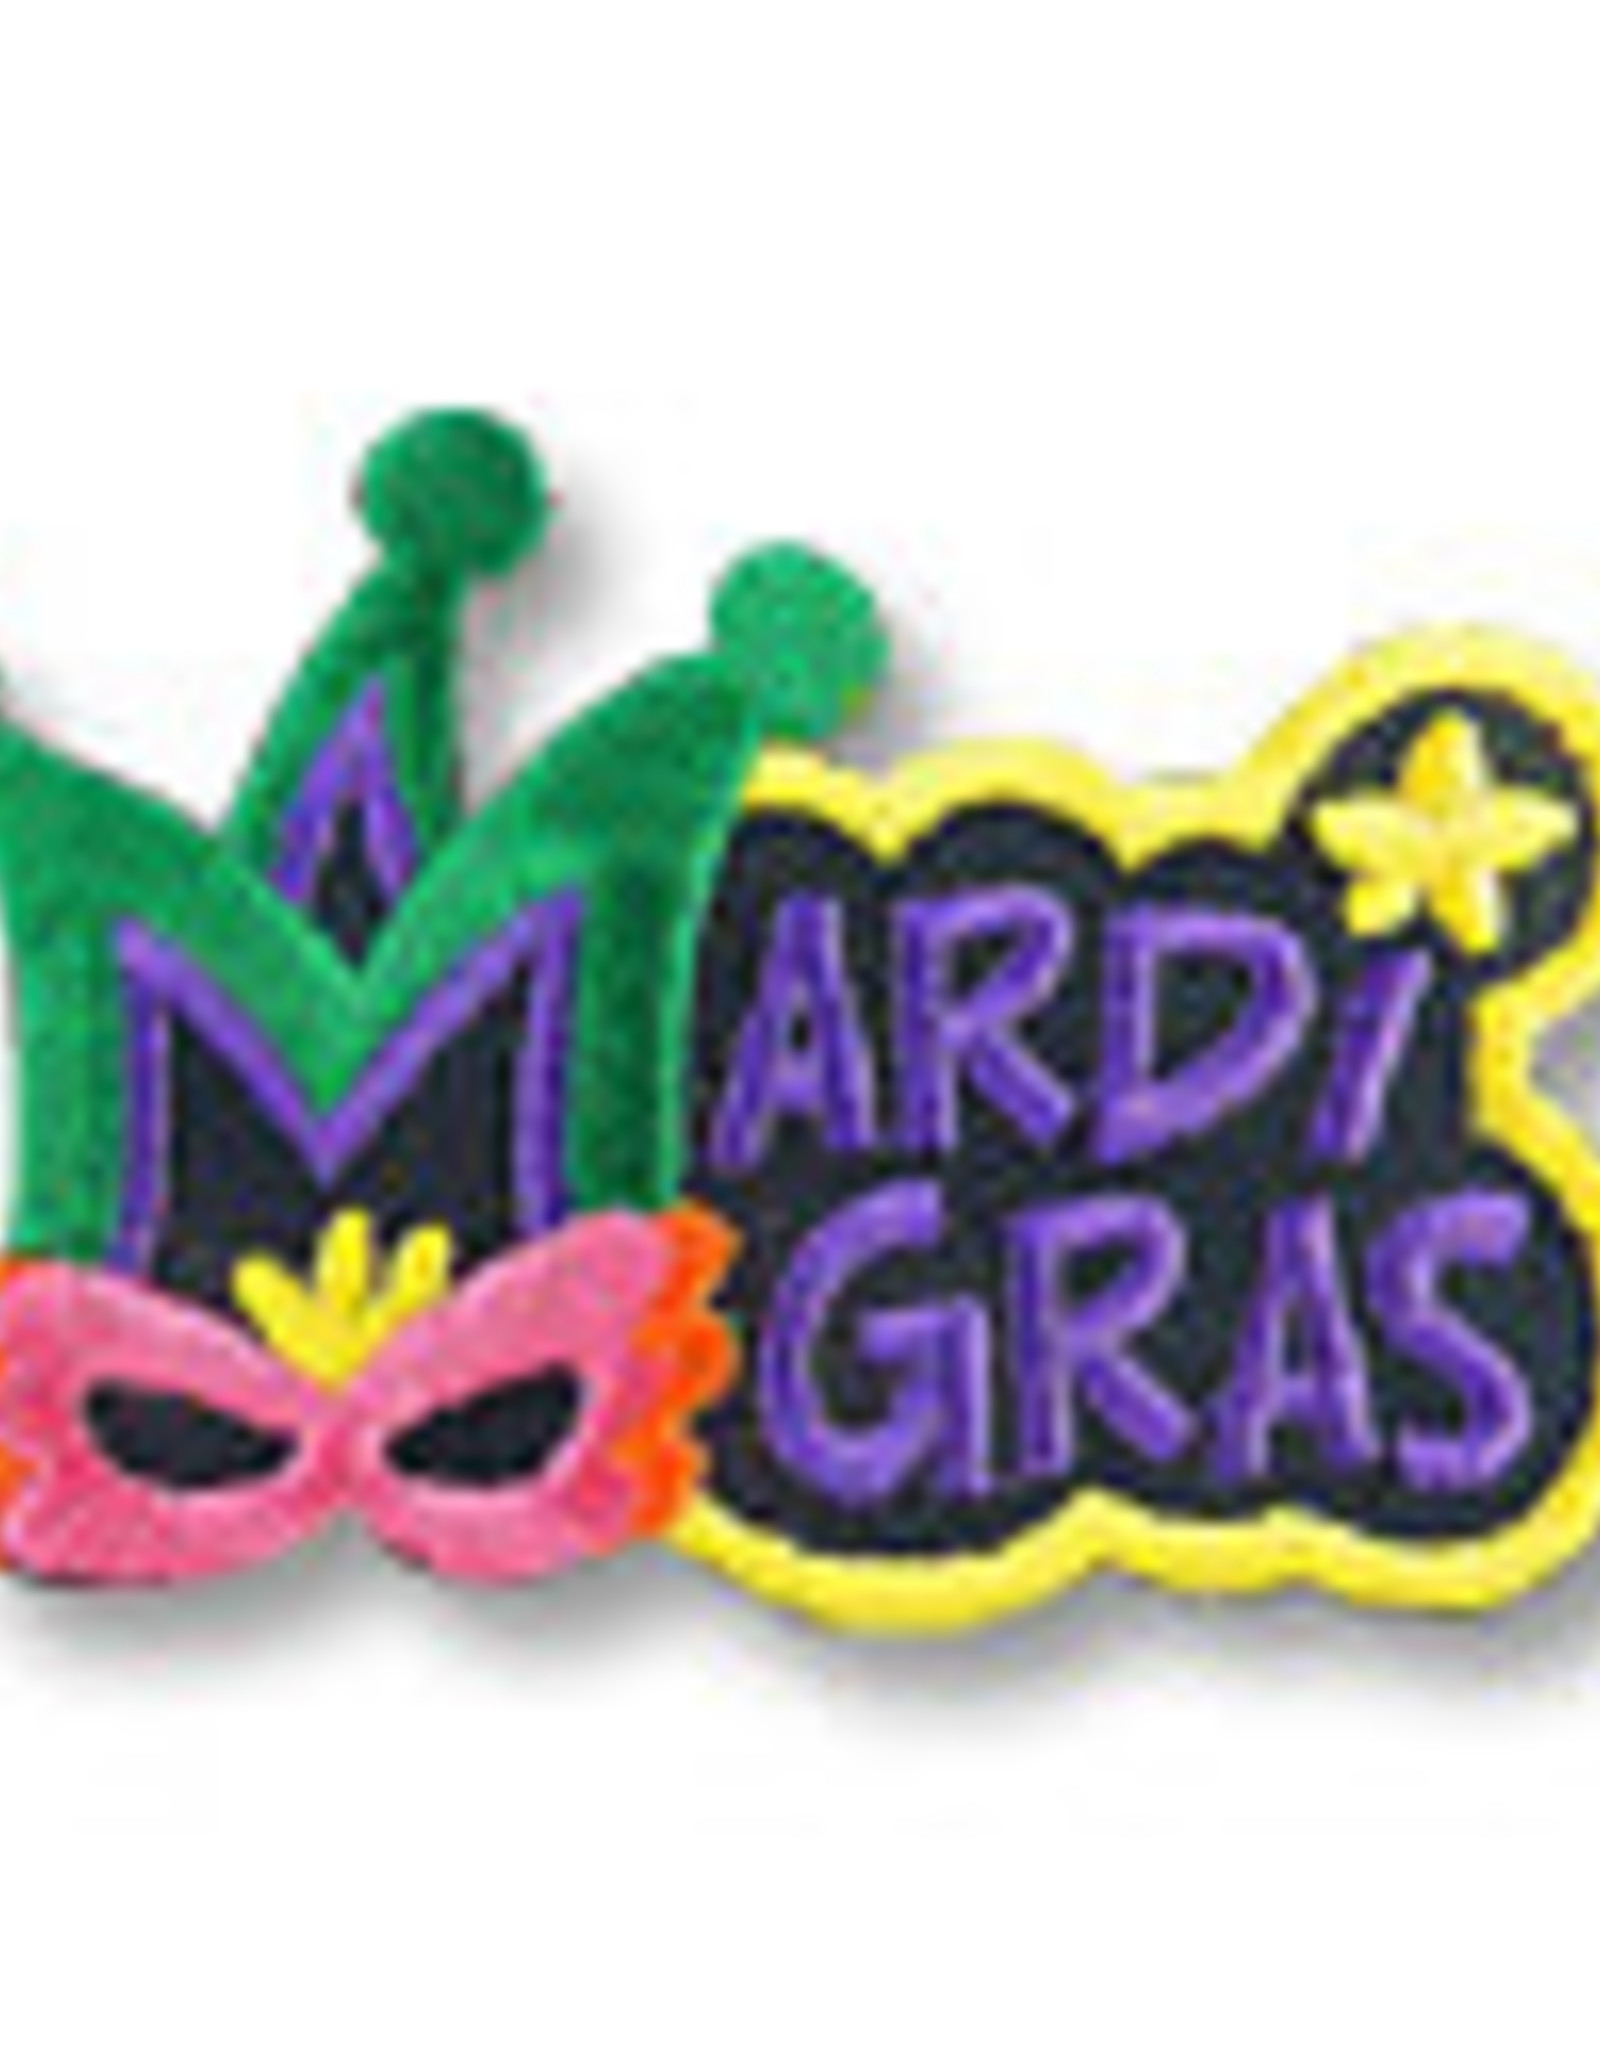 snappylogos Mardi Gras with Mask Fun Patch (6276)